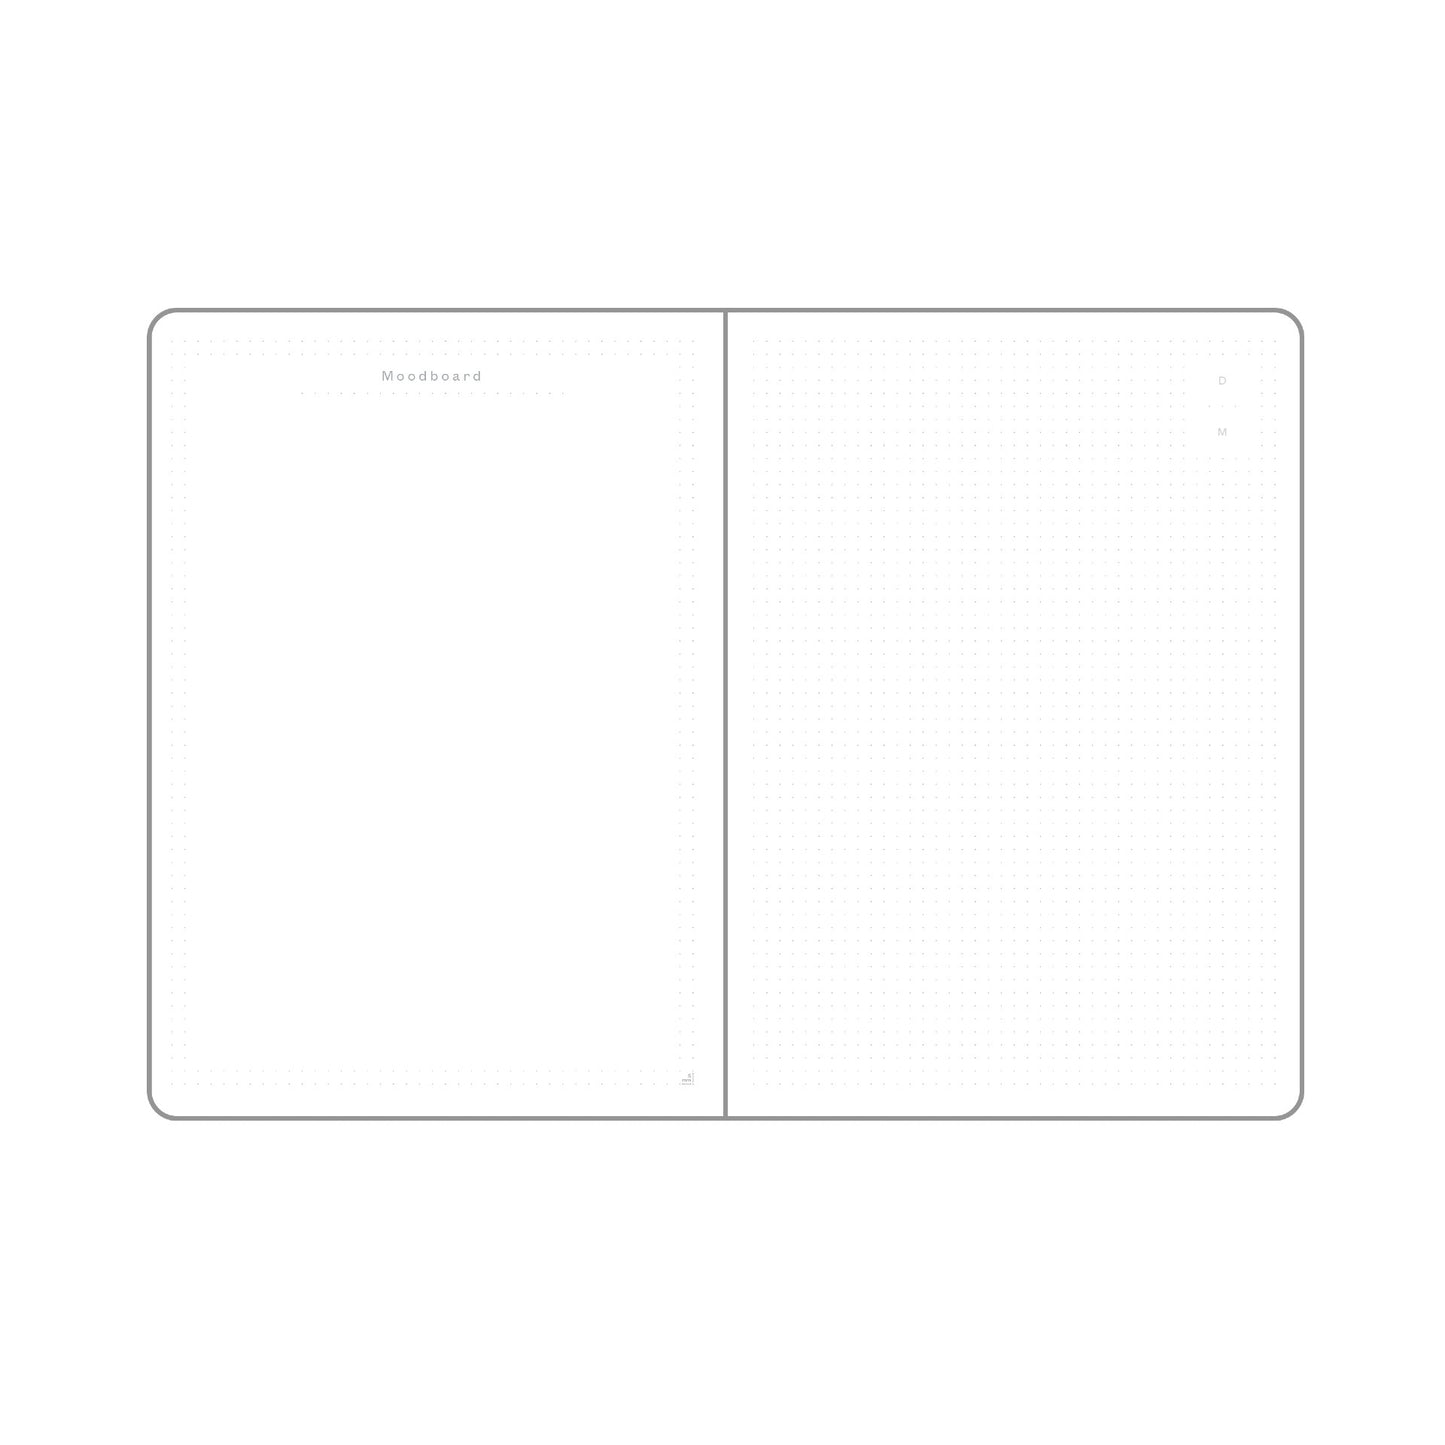 Dippy A4 Moodboard Sketch Book